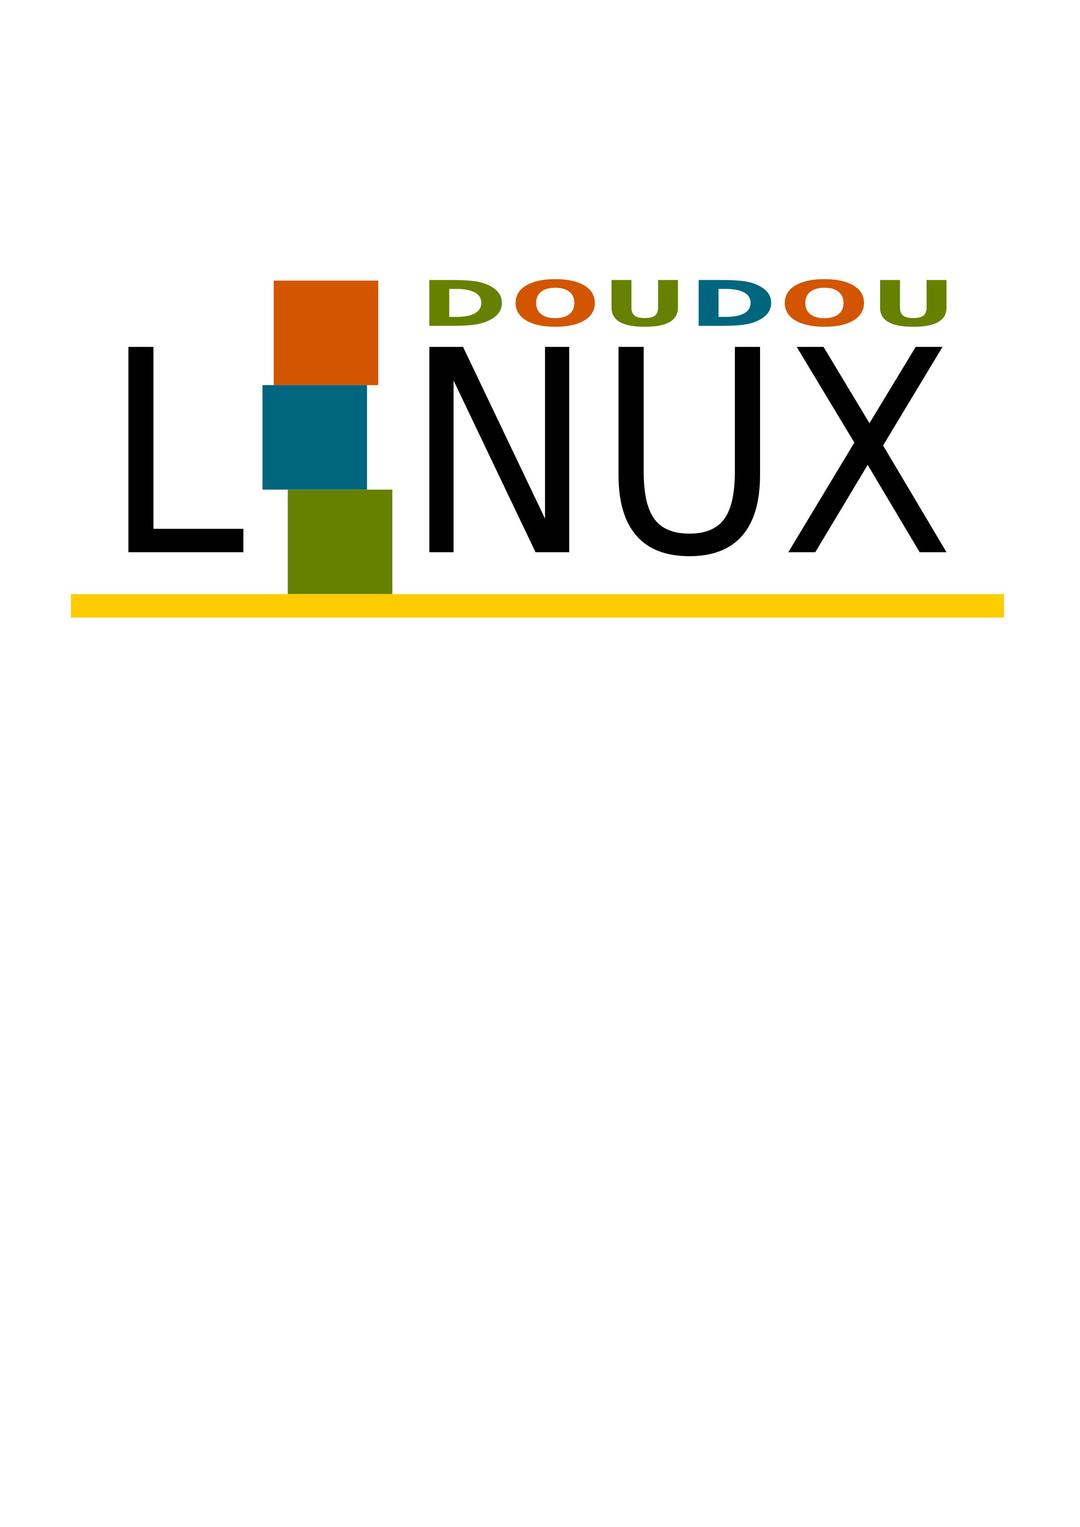 doudou linux logo proposal png transparent